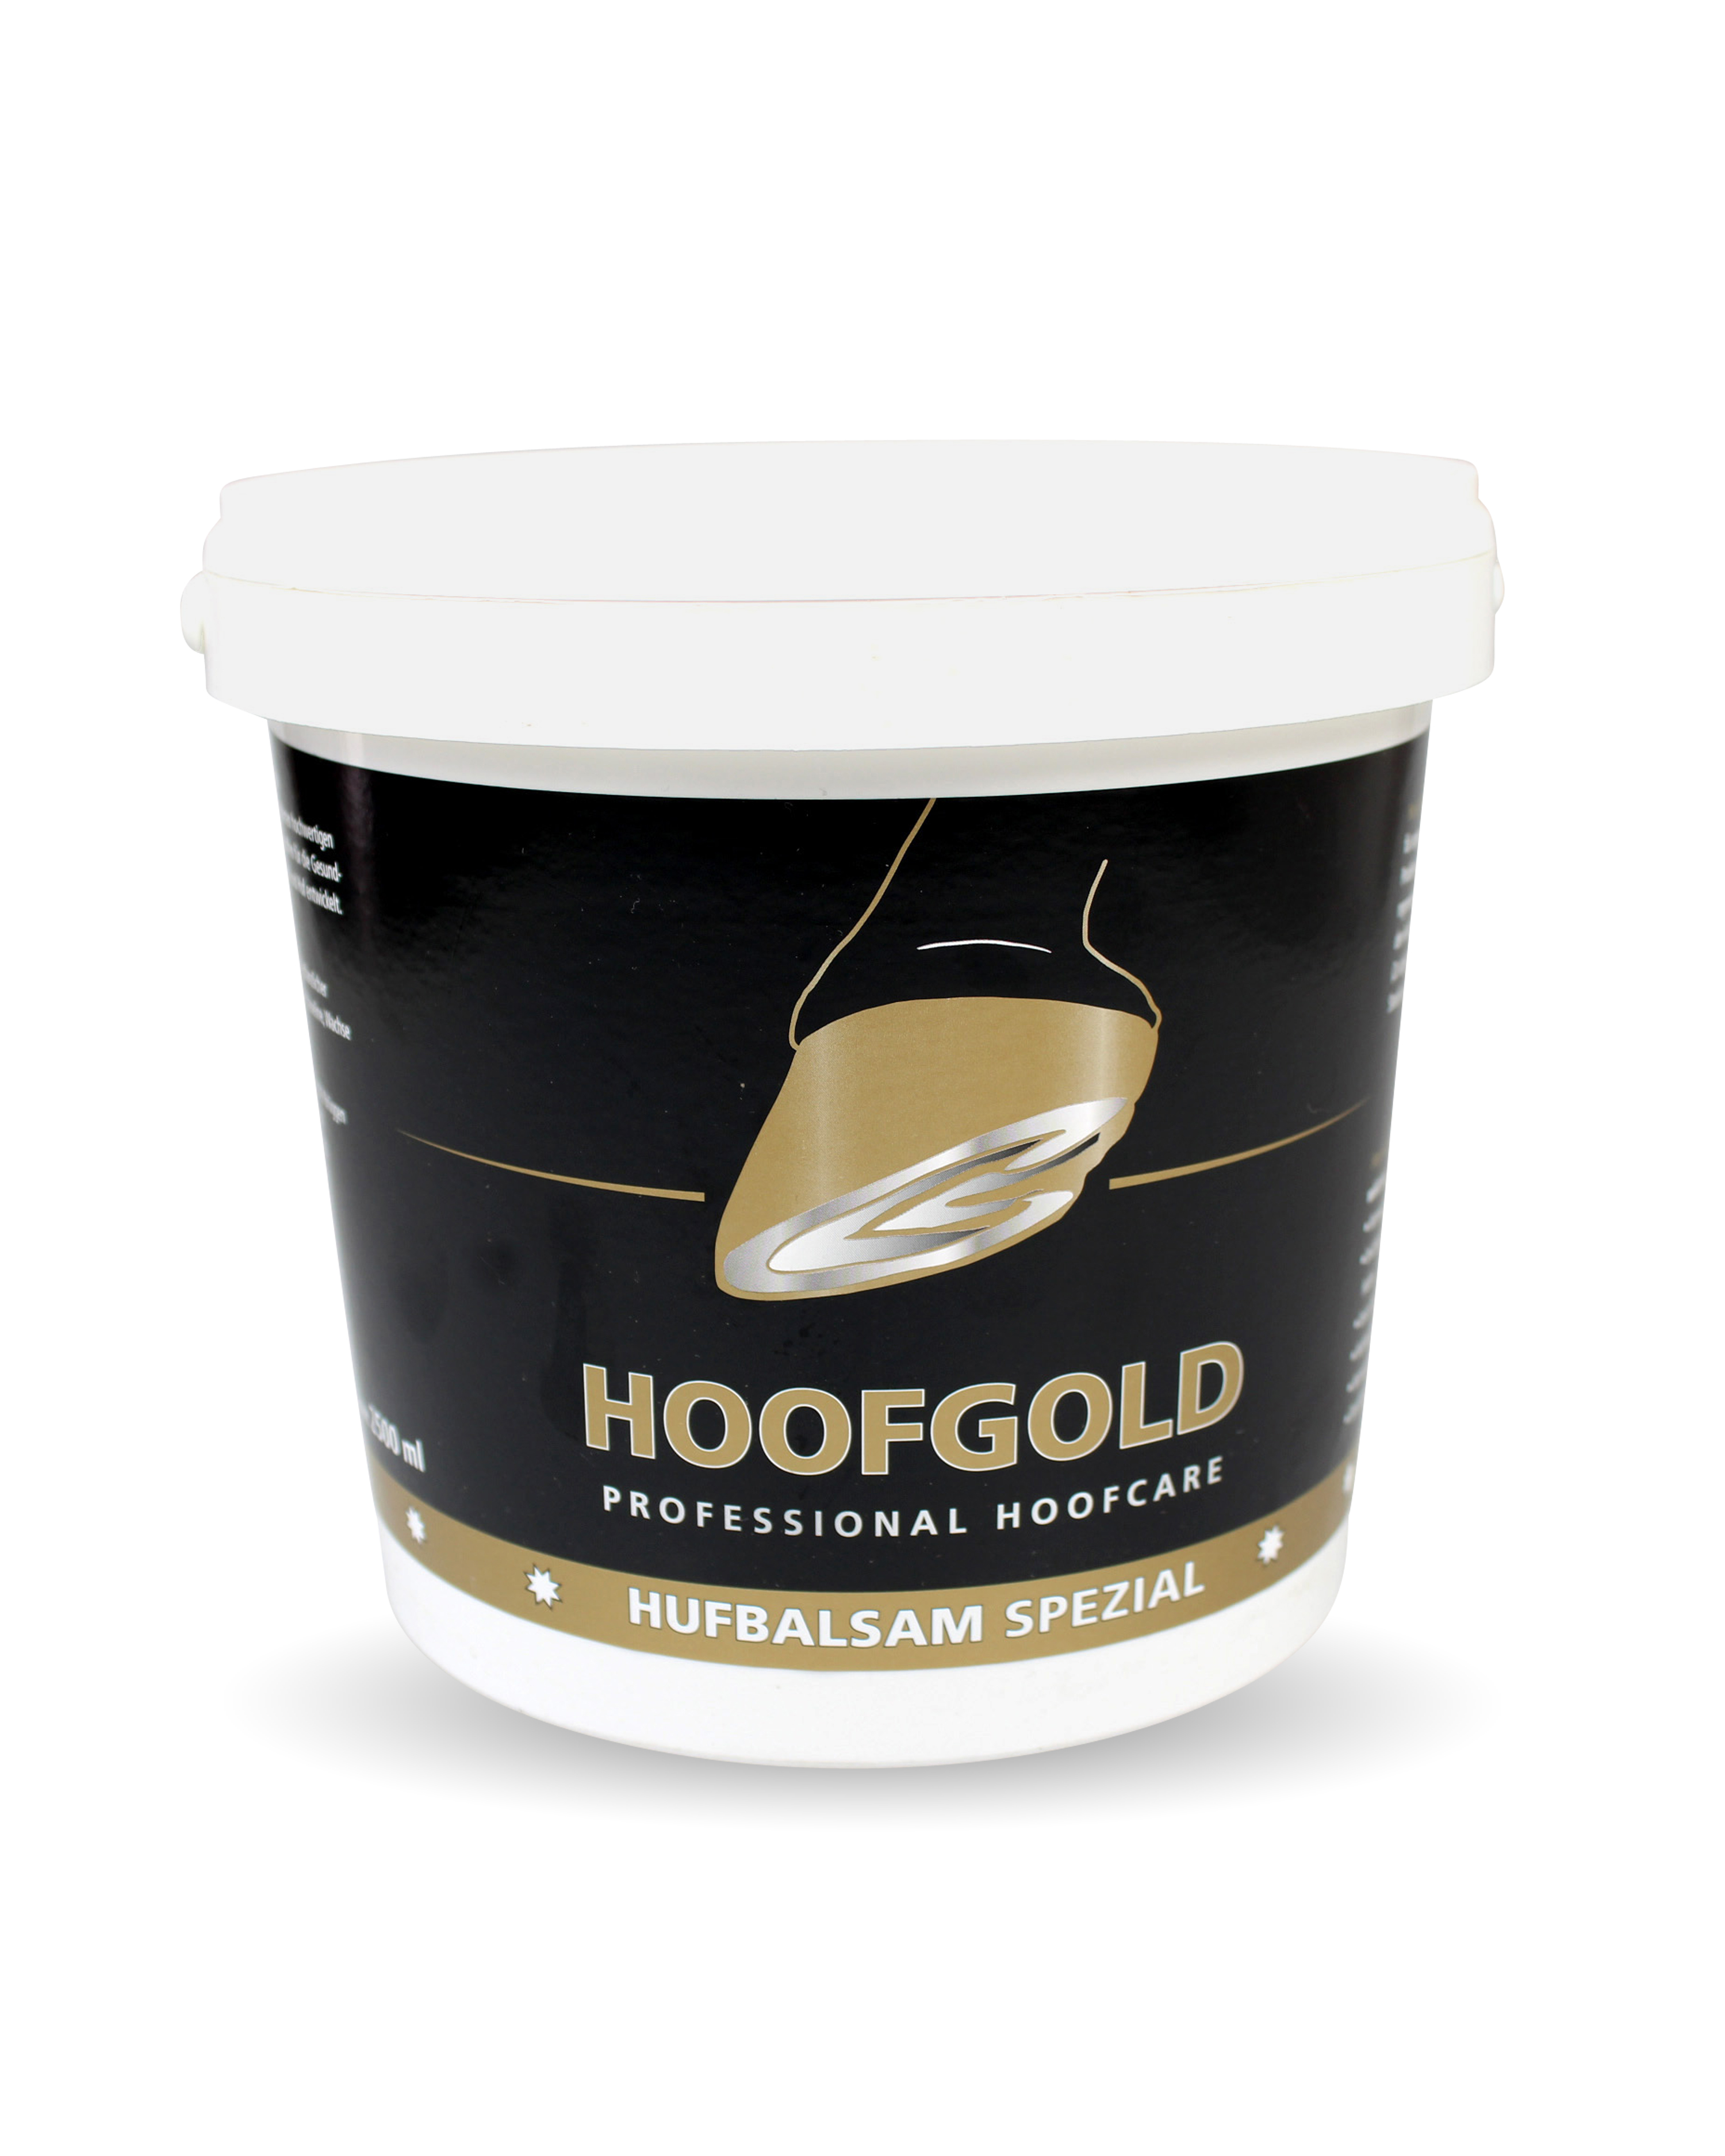 Hoofgold Hufbalsam Spezial 5000 ml